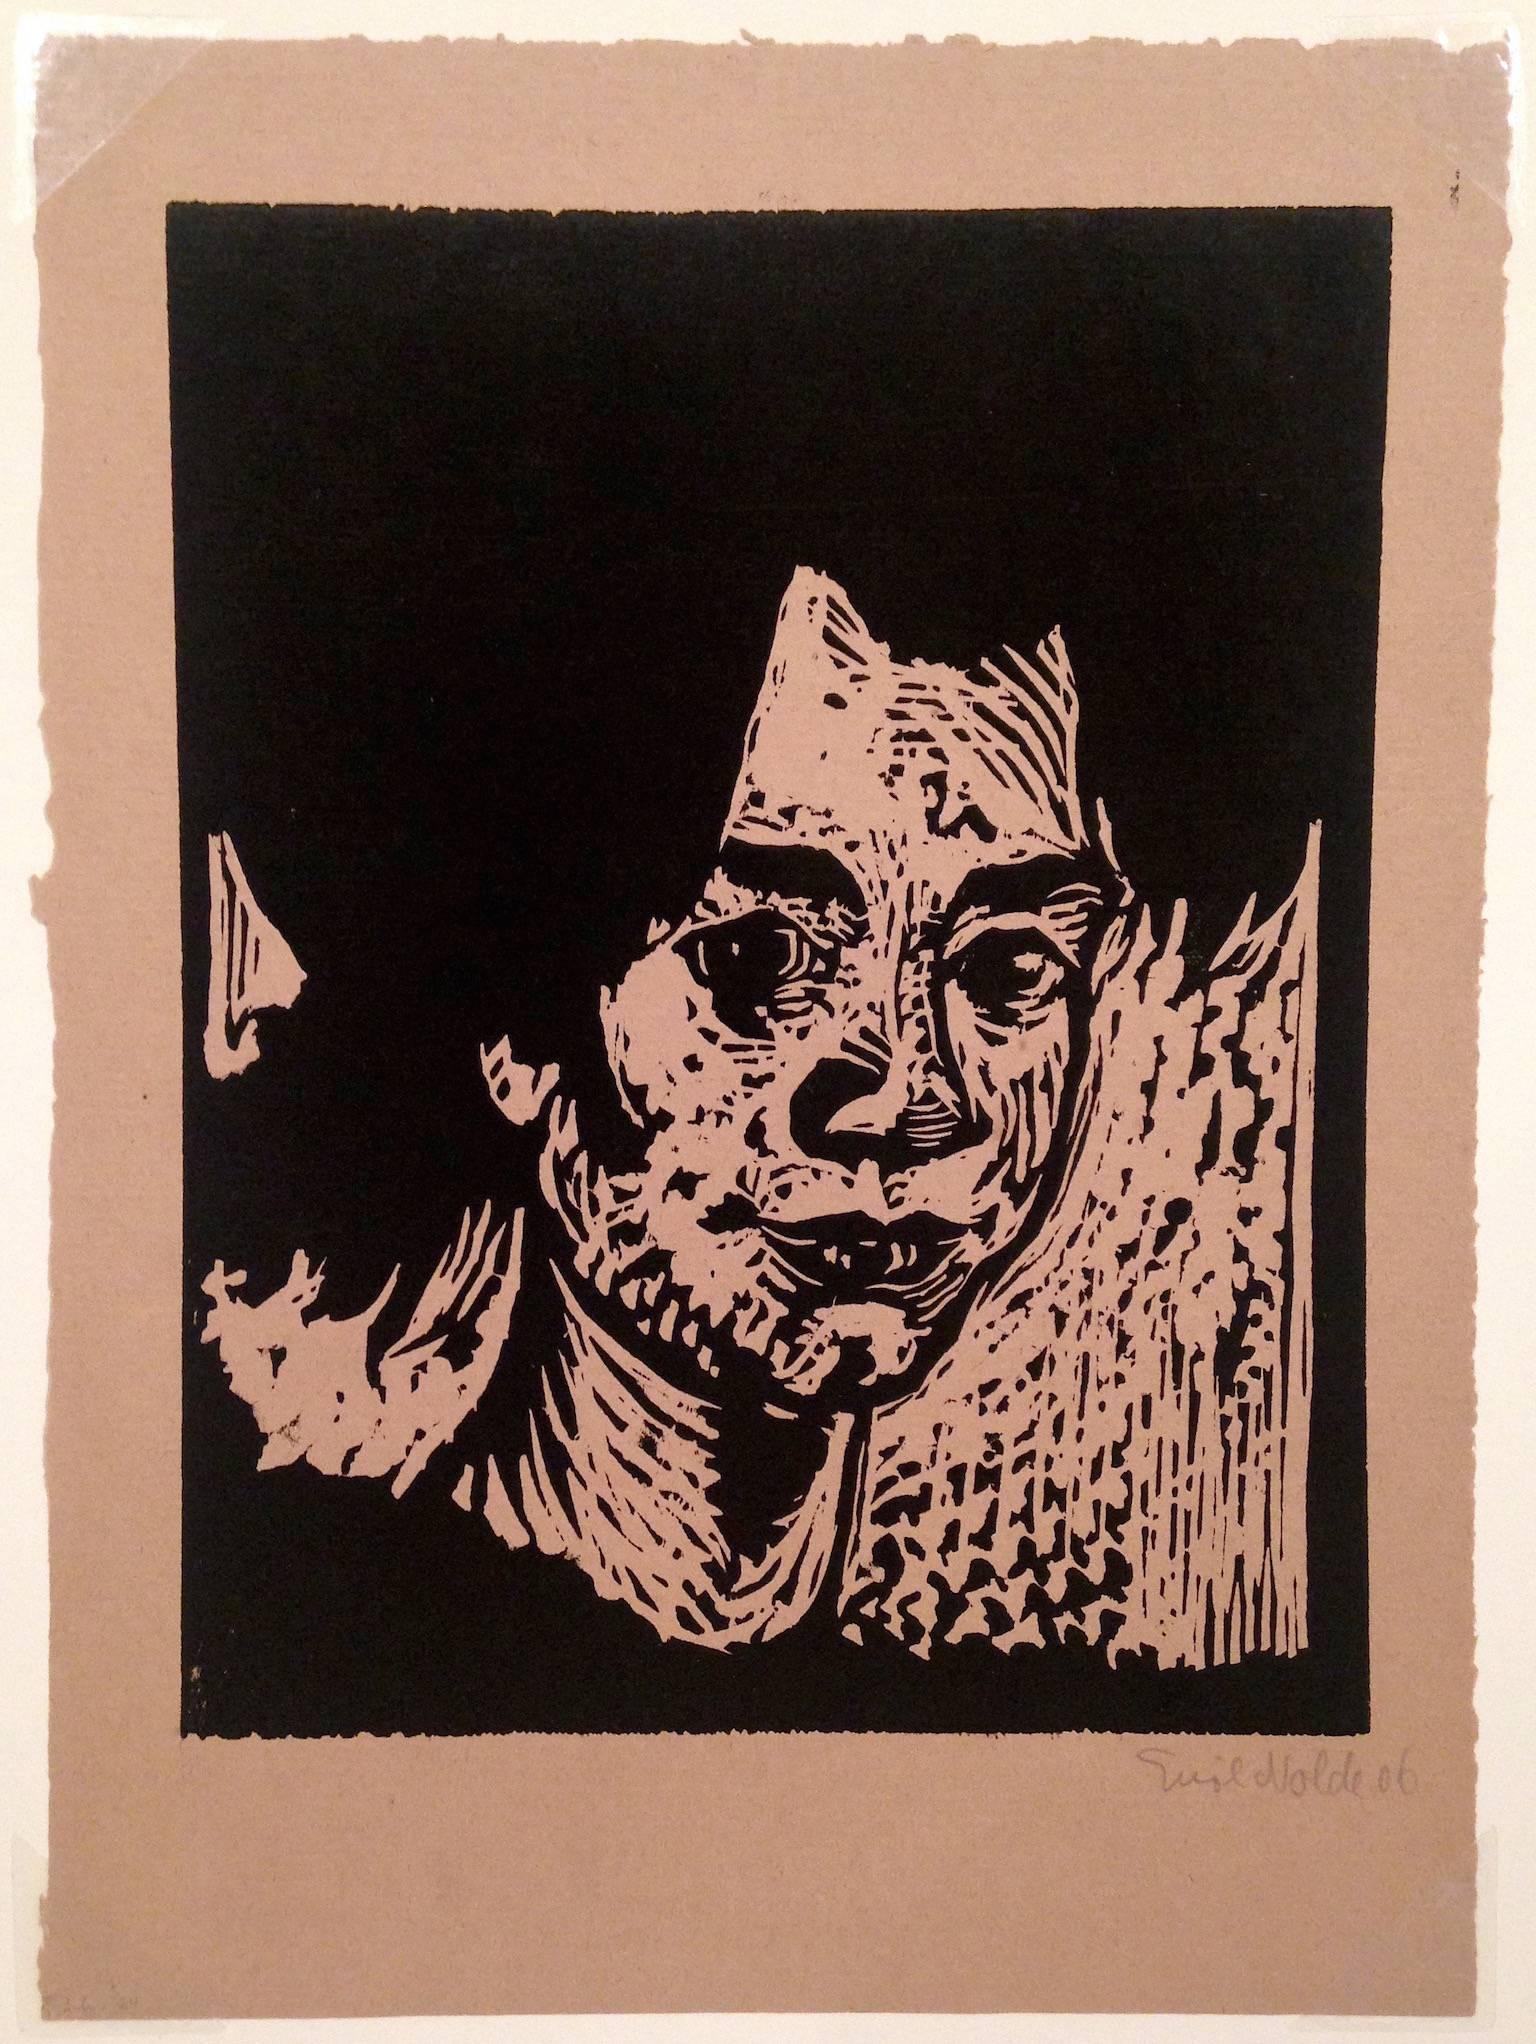 Stine (Head of a Woman) - Print by Emil Nolde